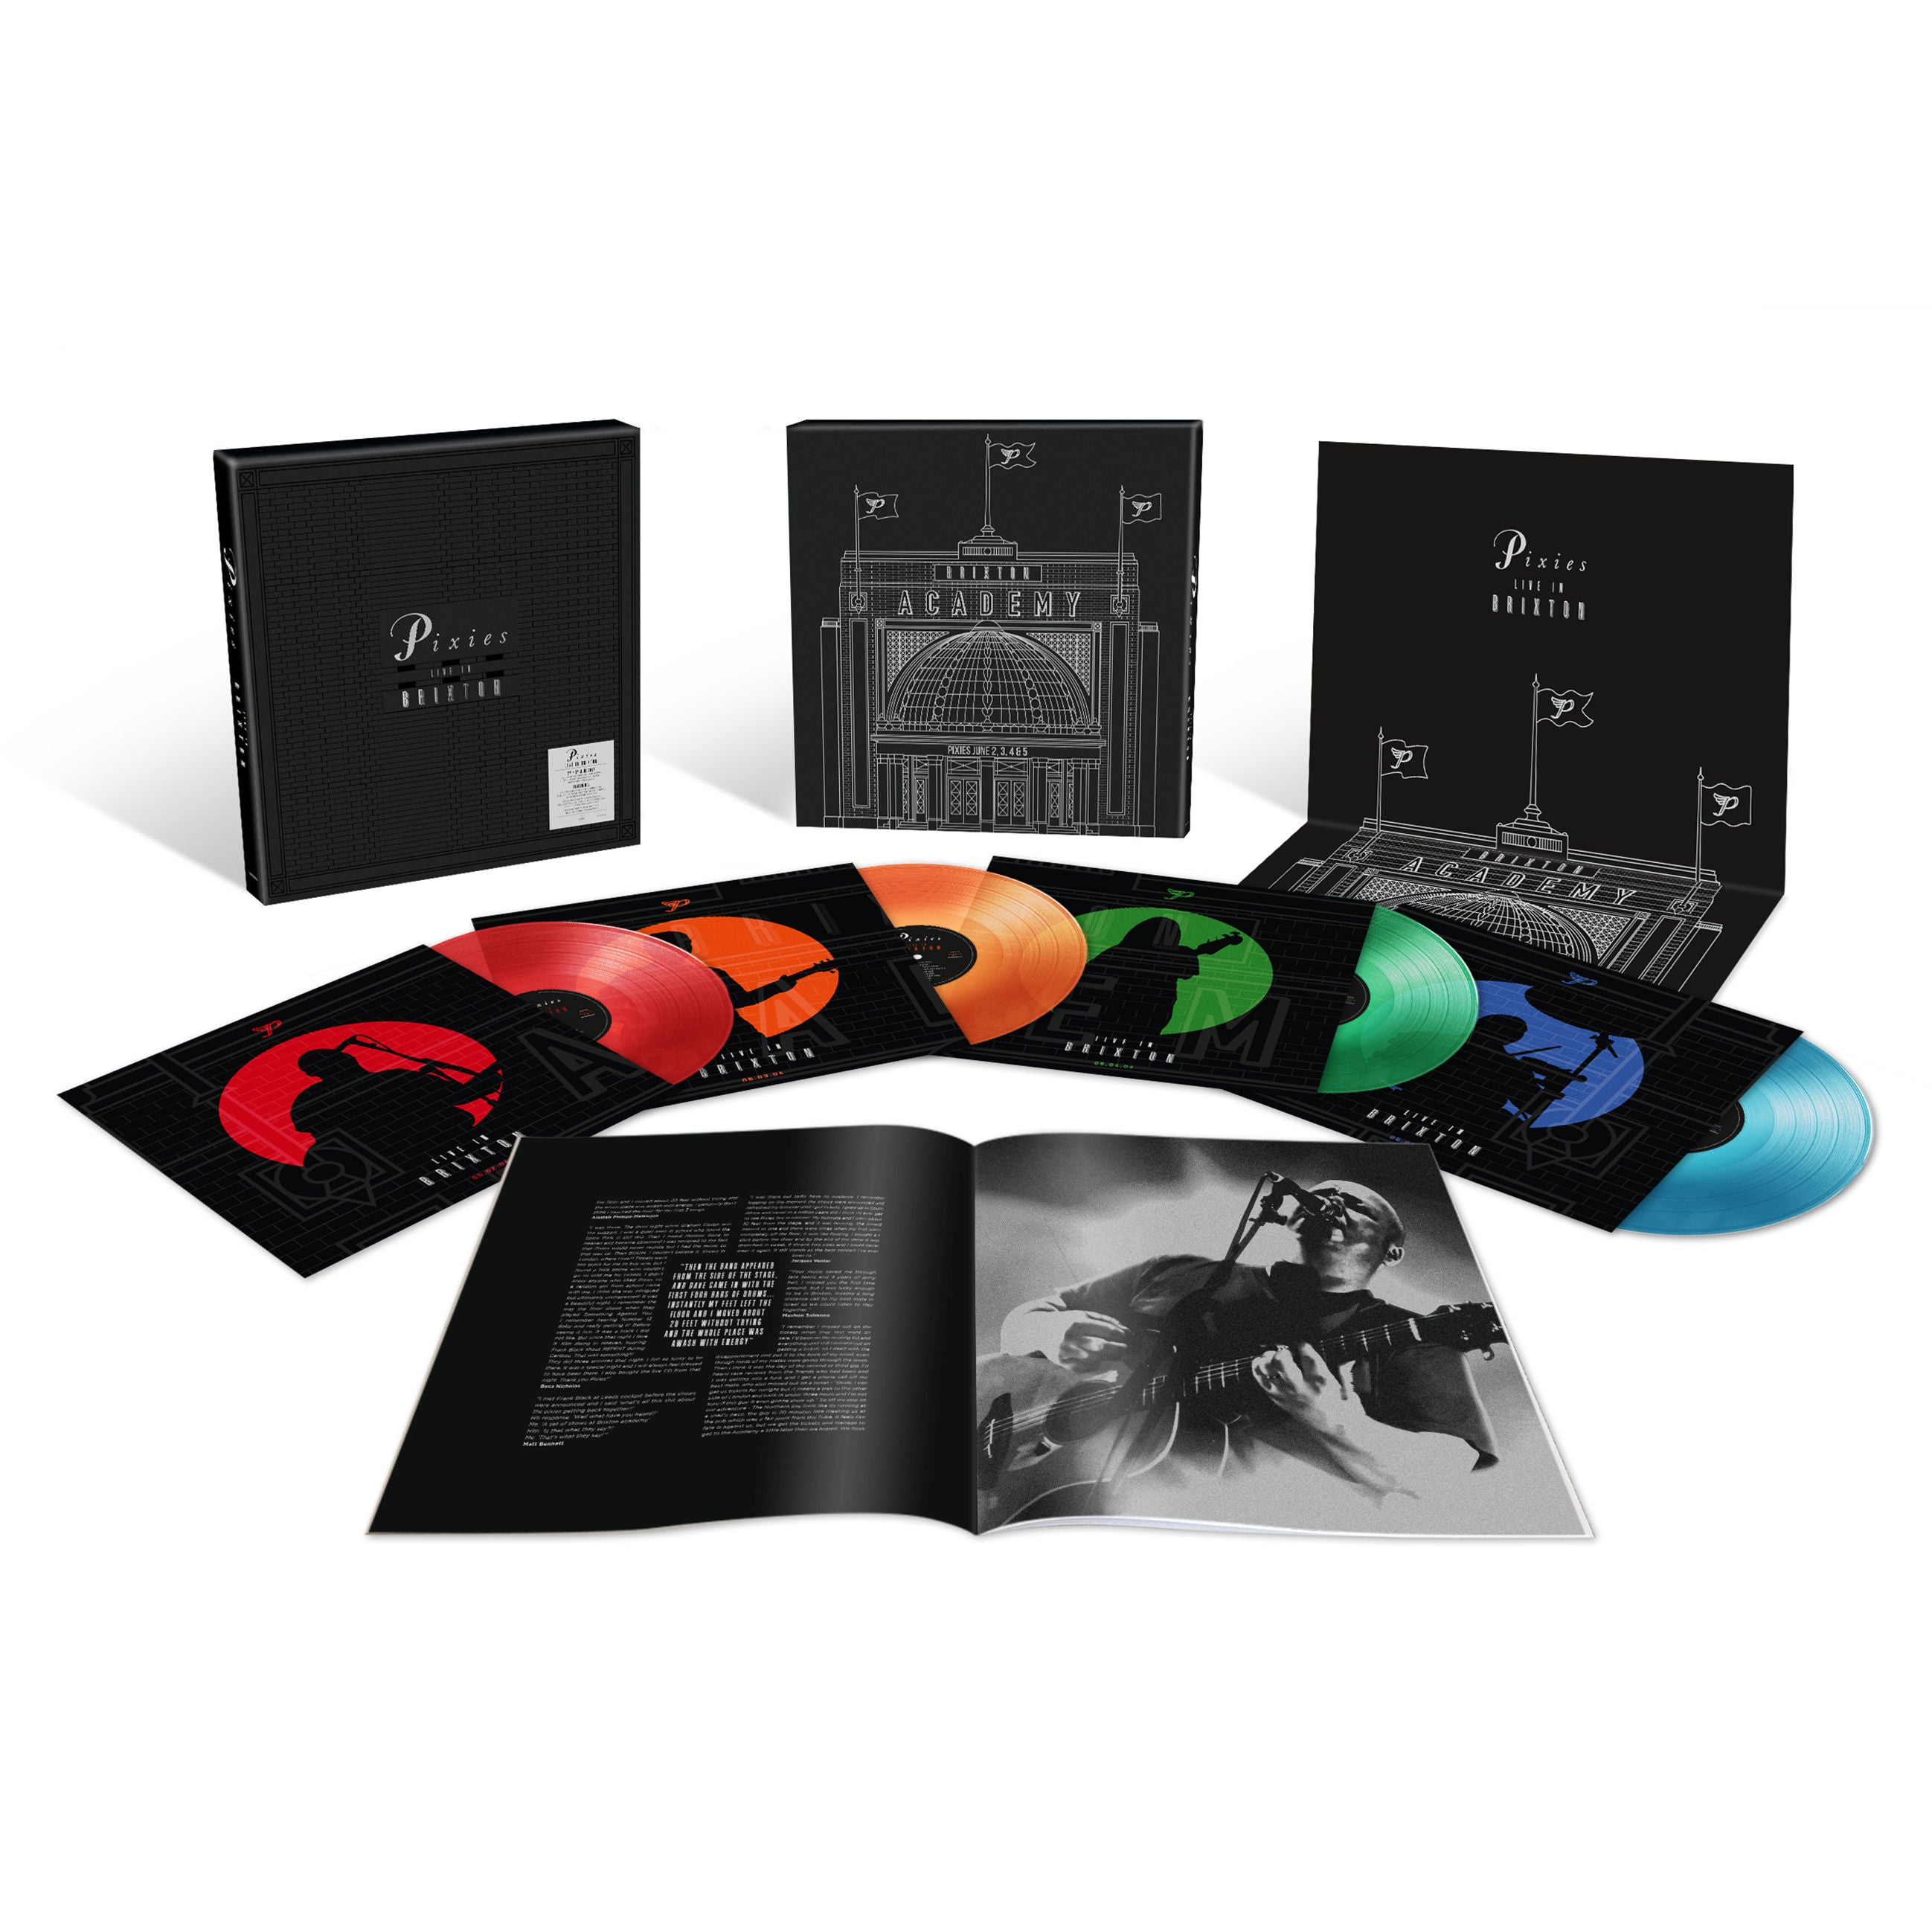 Pixies - Live in Brixton: Limited Red, Orange, Green + Blue Translucent Vinyl 8LP Box Set